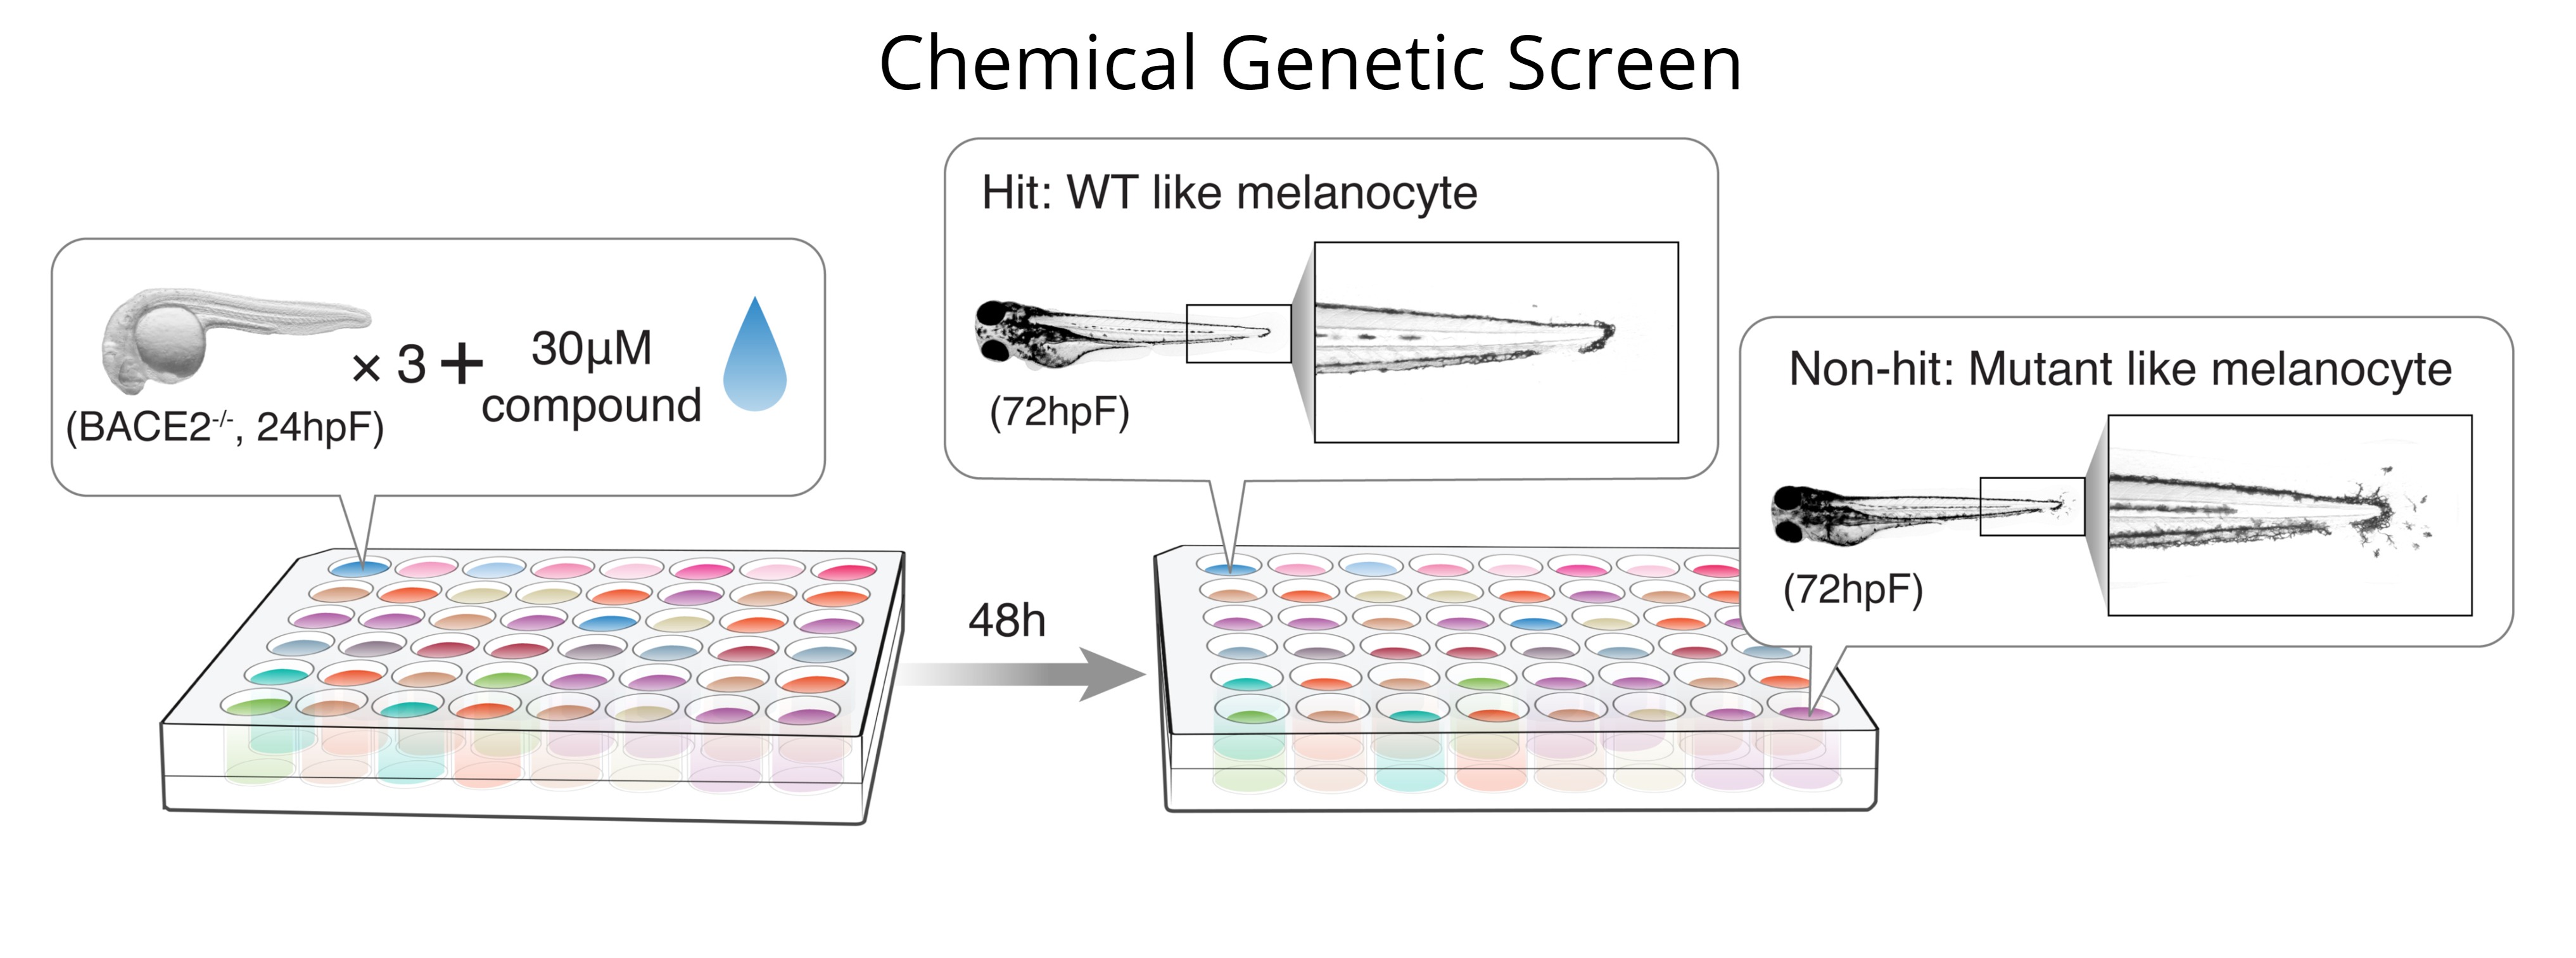 Chemical Genetic Screen